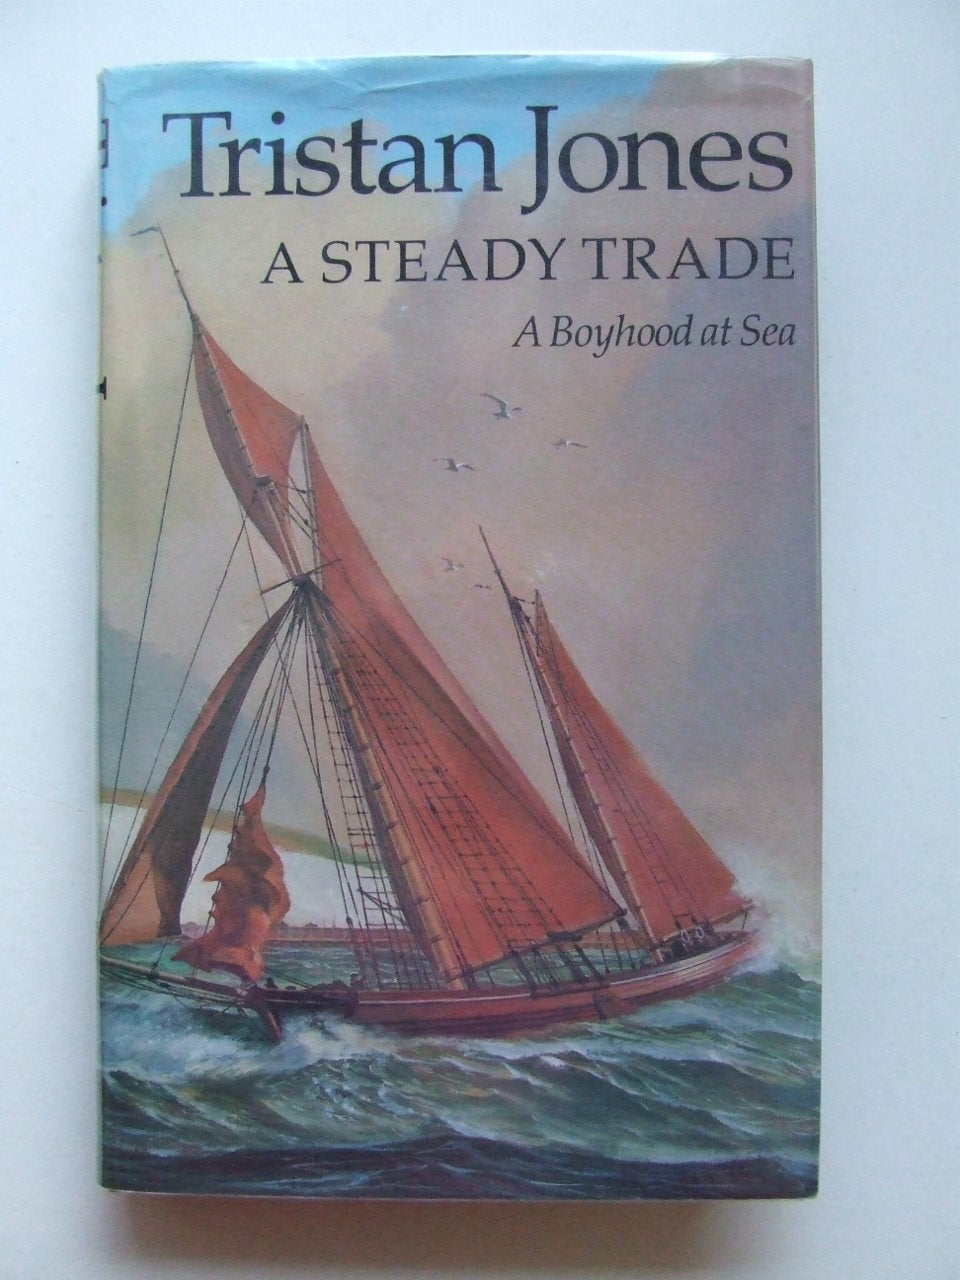 A Steady Trade, a boyhood at sea